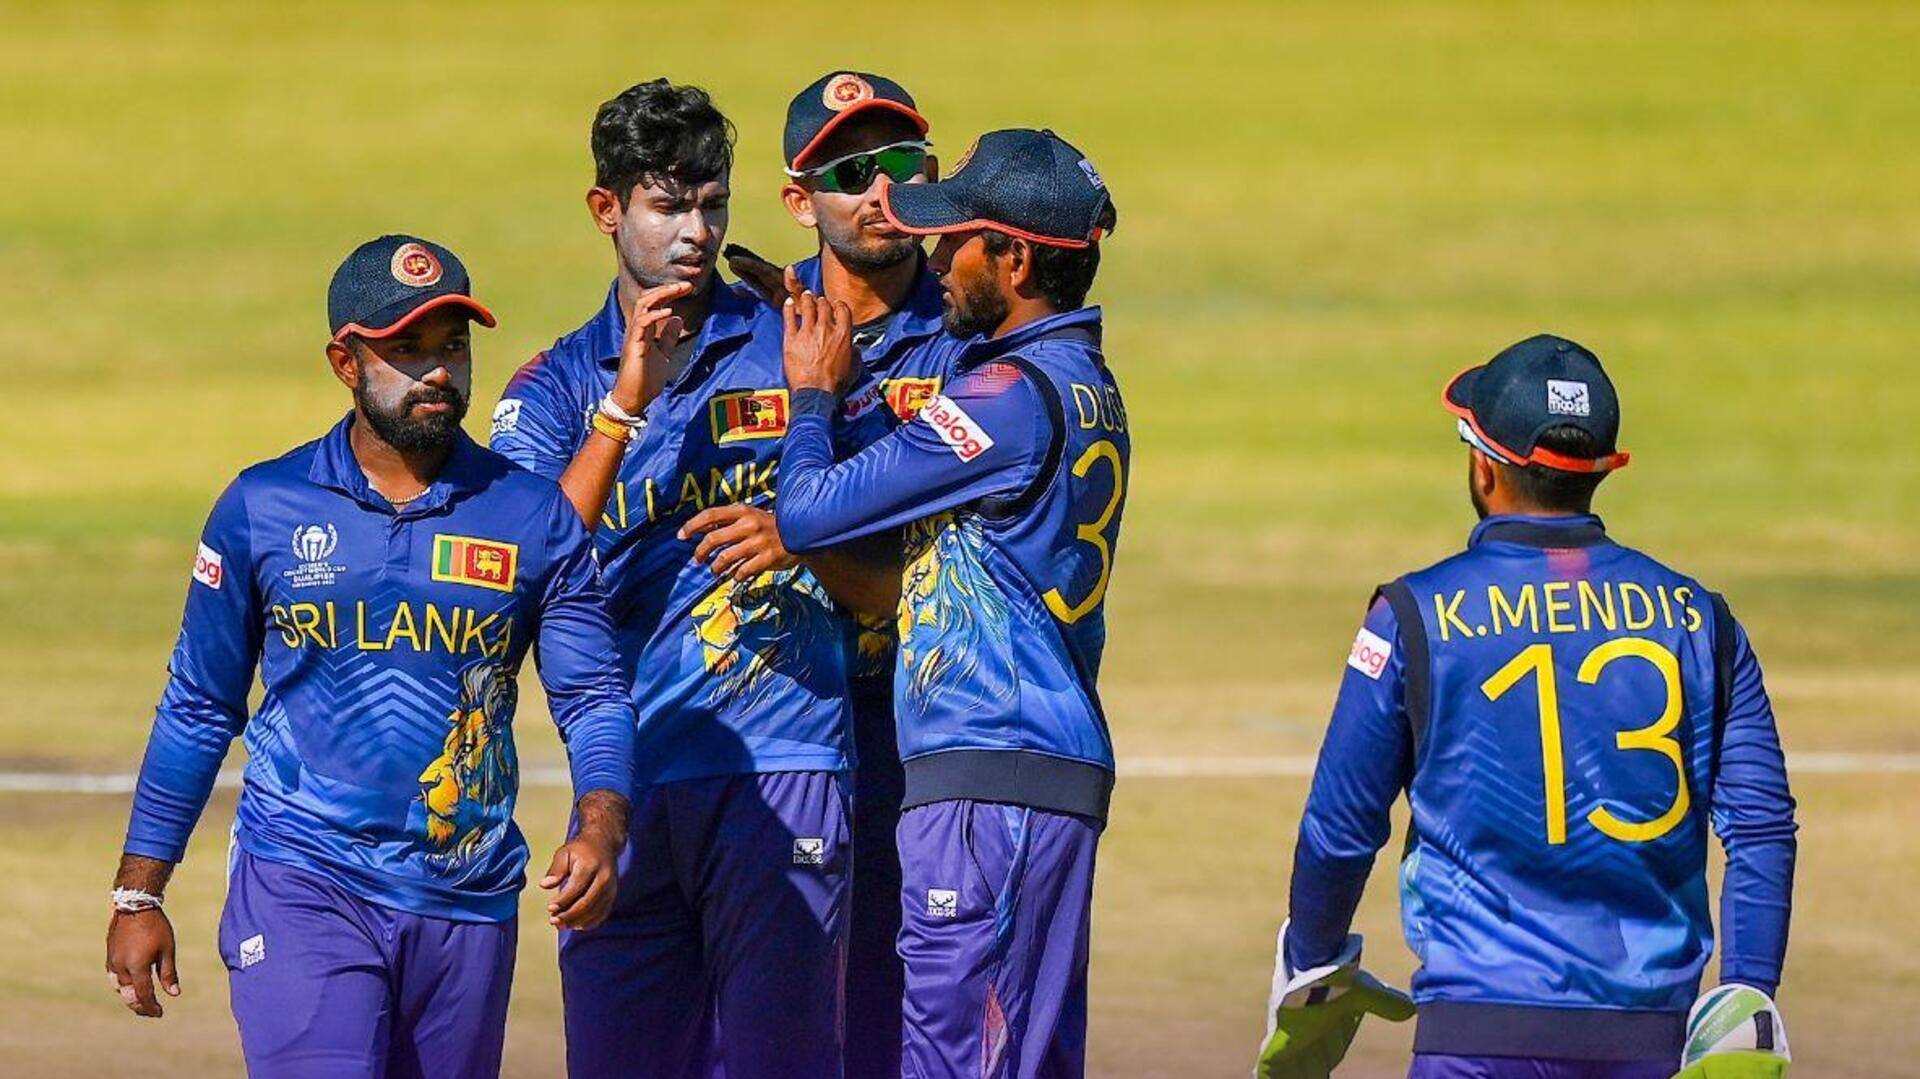 CWC Qualifiers, Sri Lanka humble West Indies: Key stats